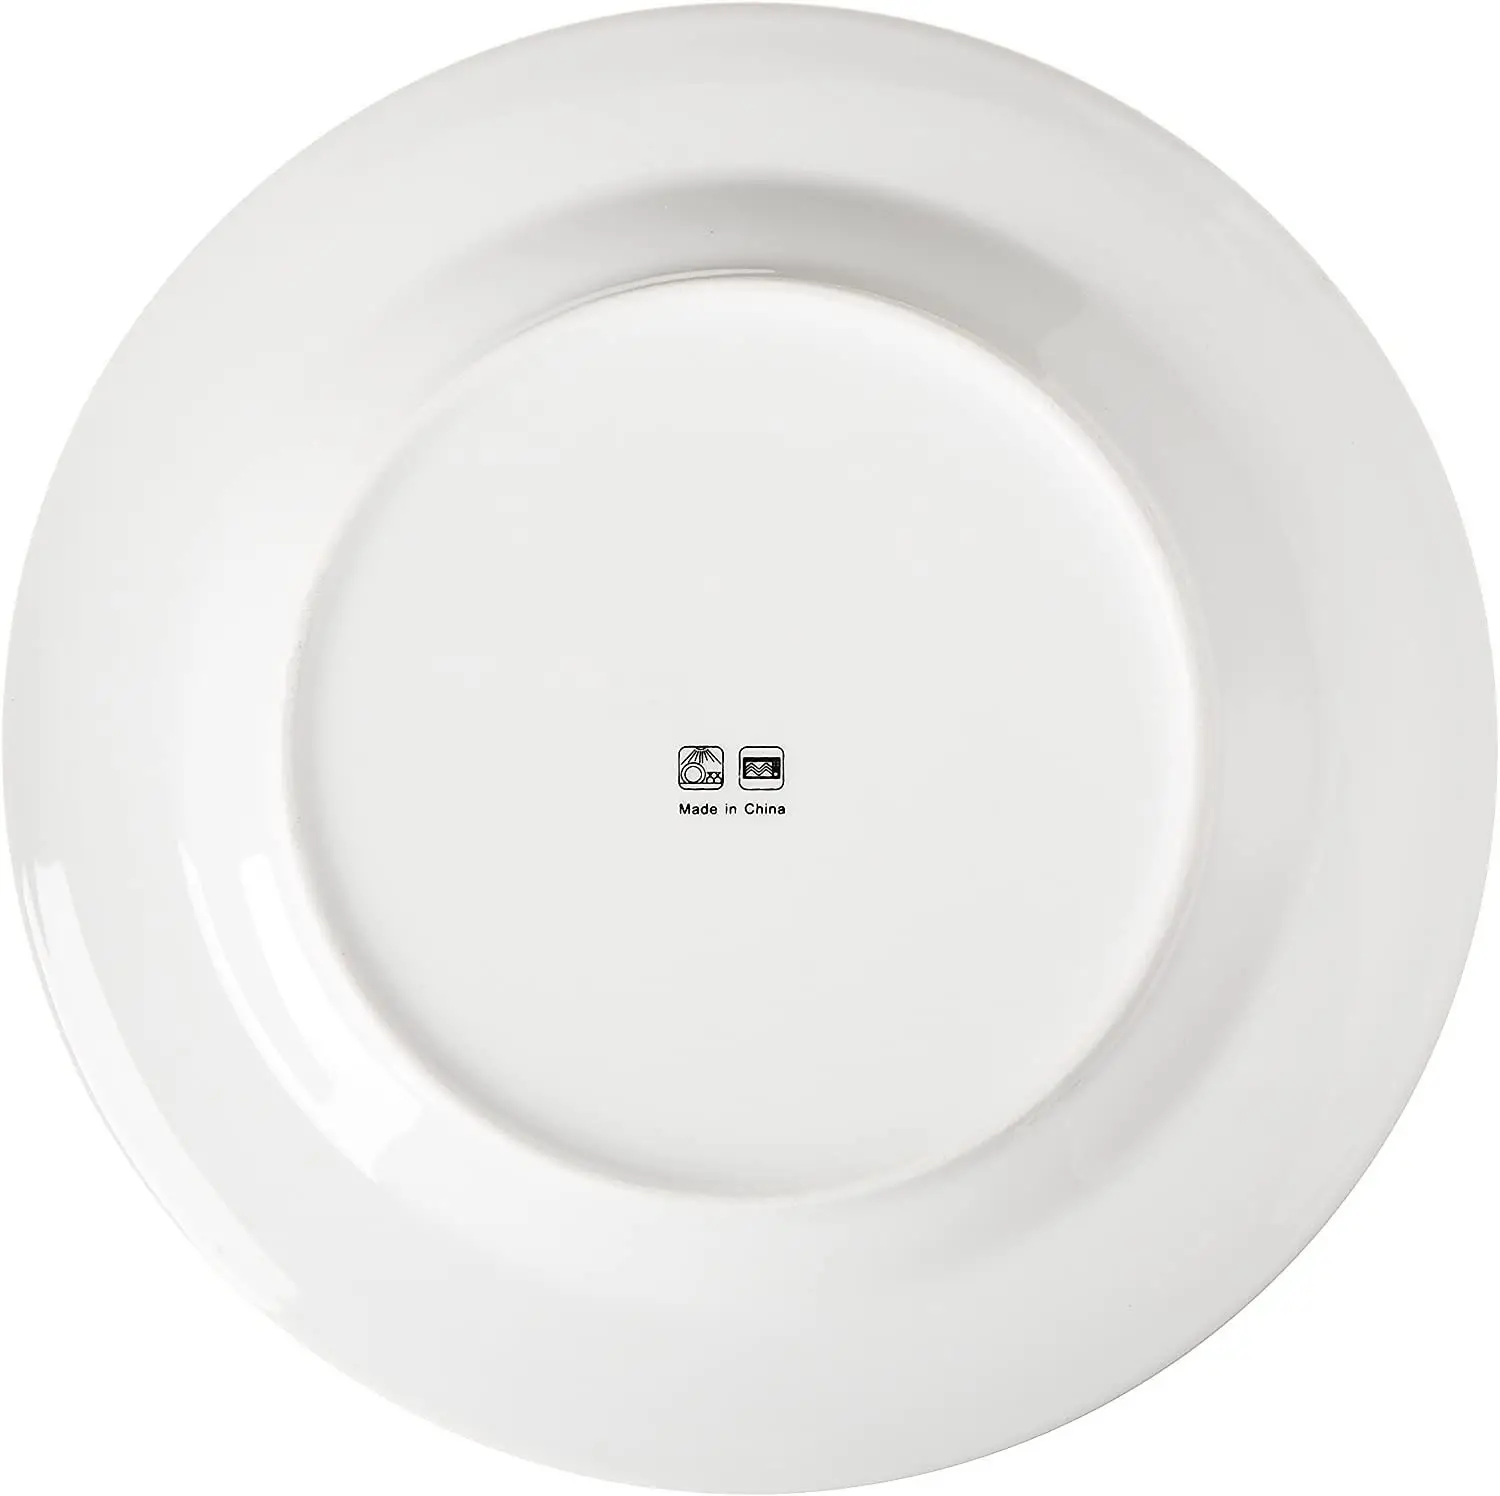 AB grade high quality white ceramic Dinner Plate